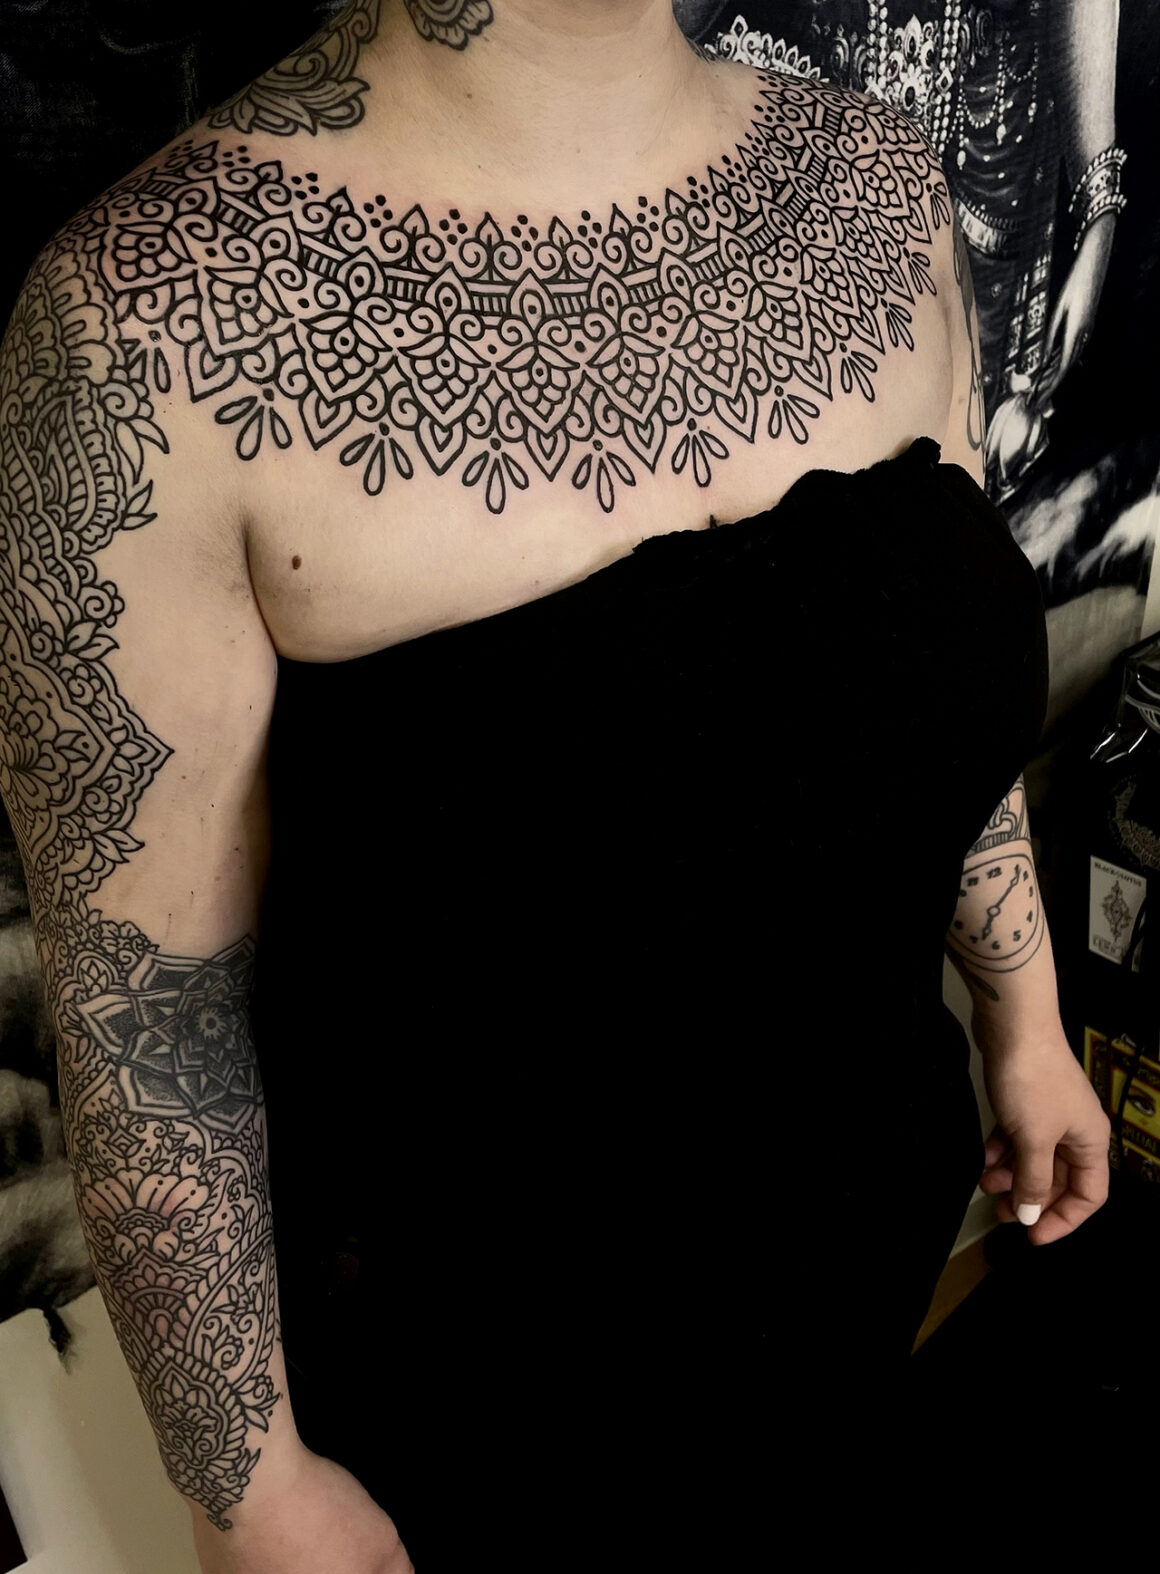 Tattoo by Lenn Black Lotus, @lennblacklotus